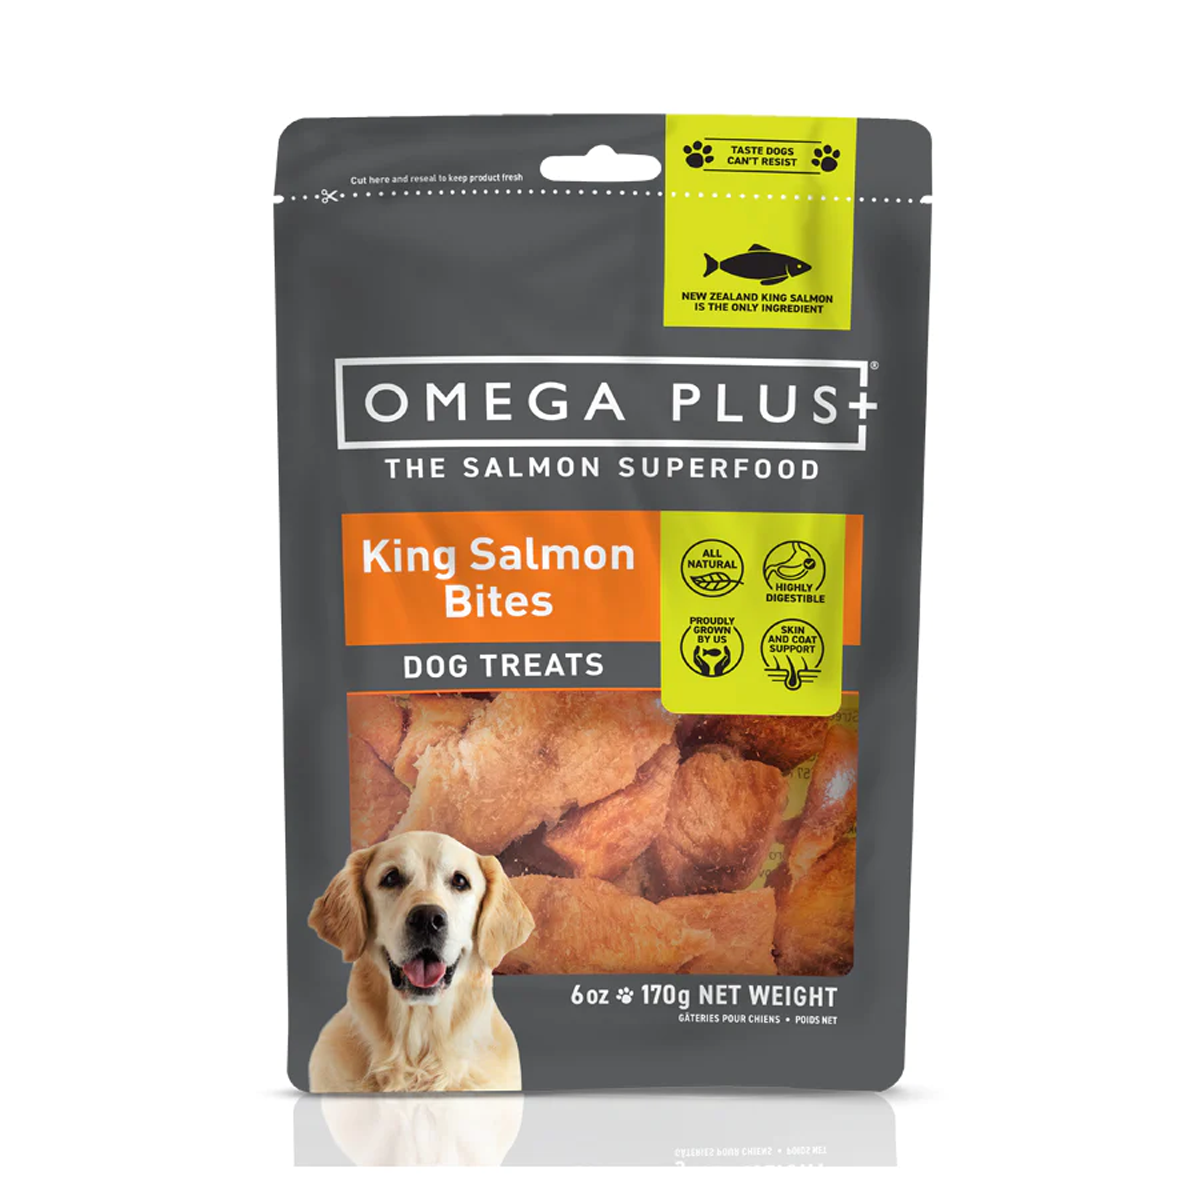 Omega Plus King Salmon Bites